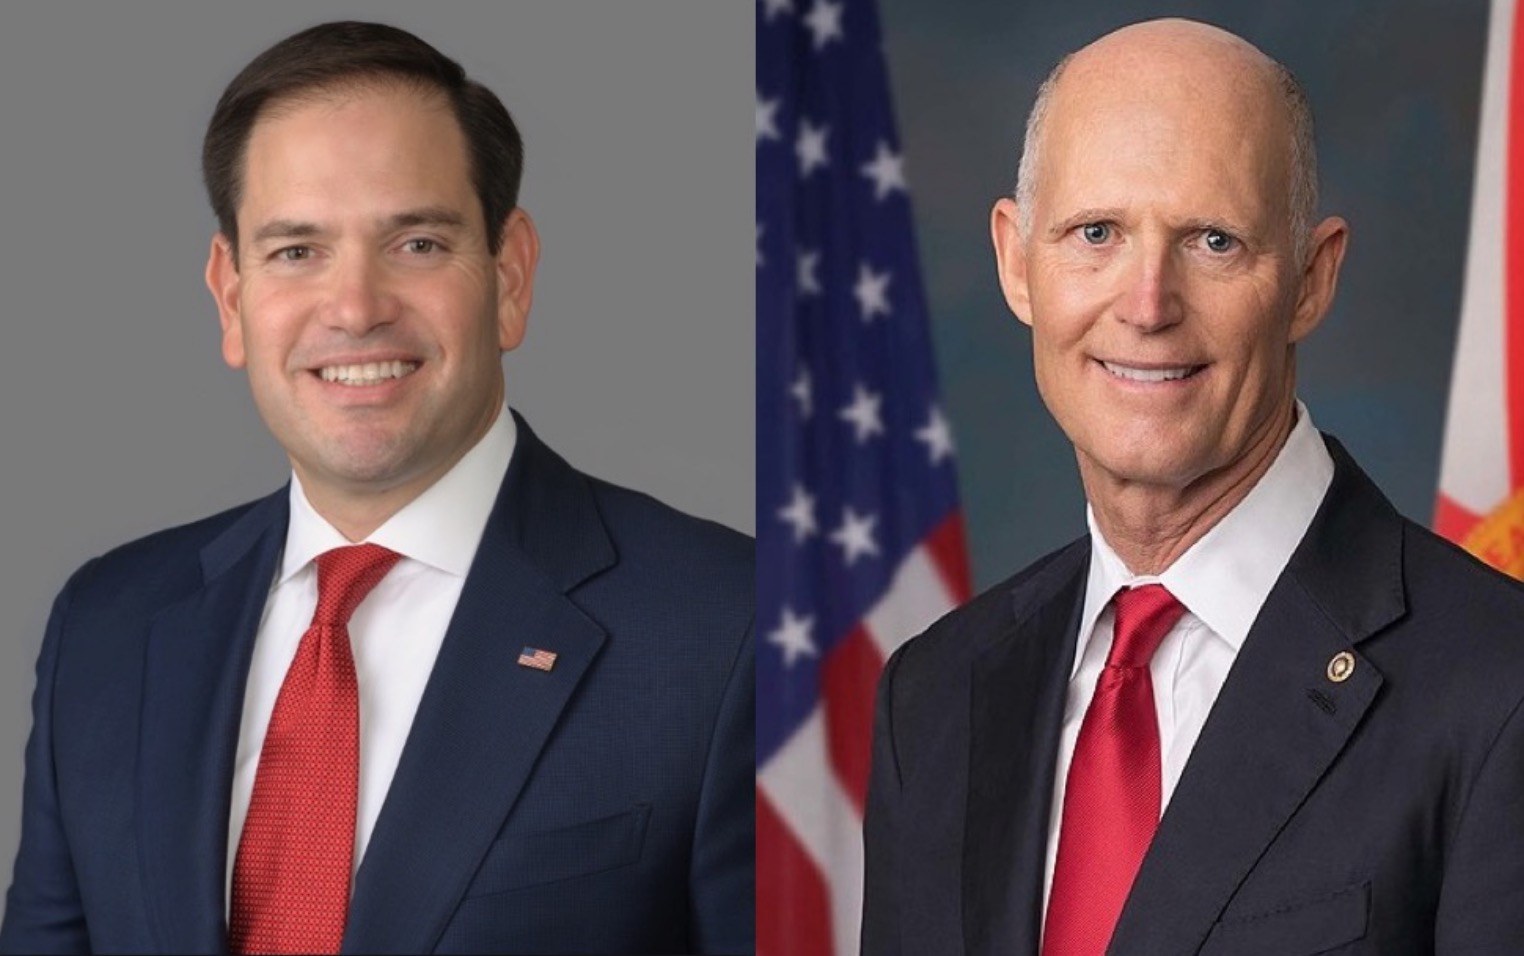 Rubio and Scott vote against objection to Arizona electoral votes